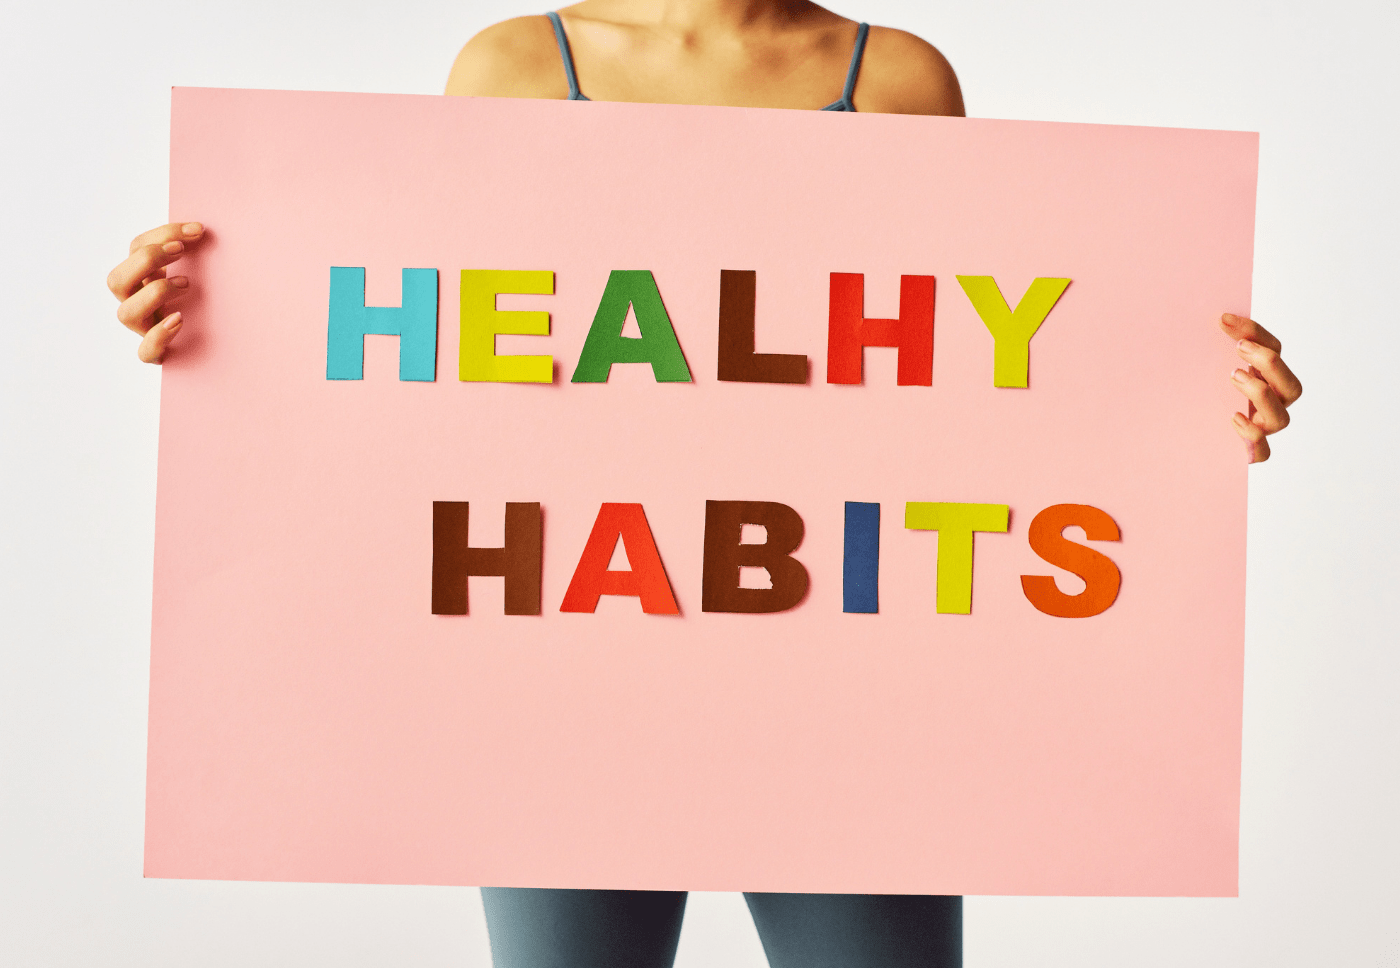 Create Healthy Habits